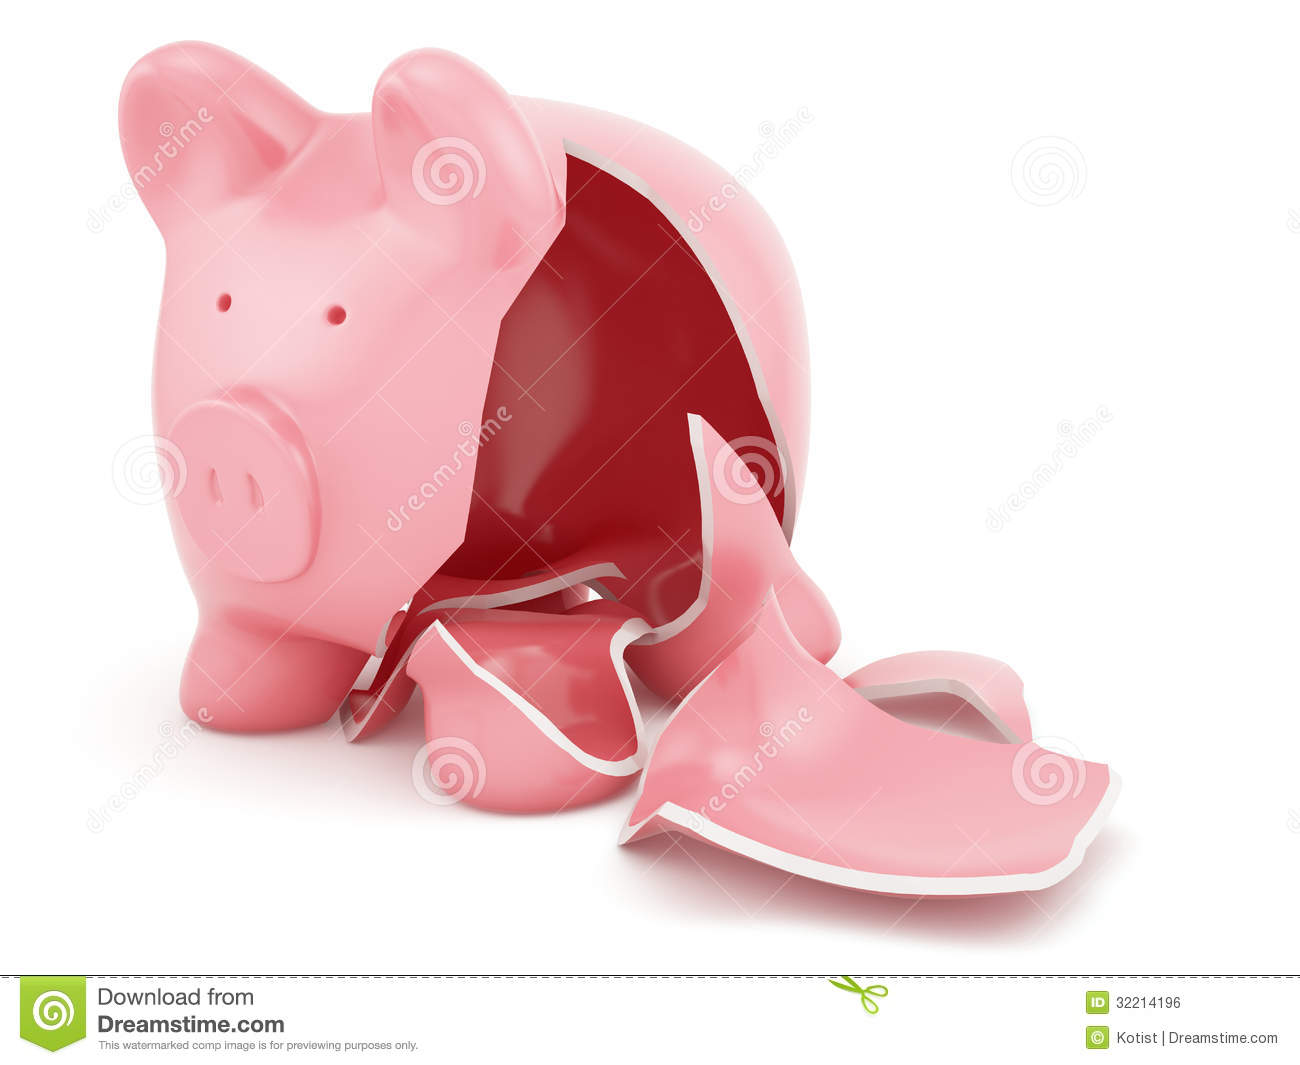 Royalty Free Stock Image  Empty Broken Piggy Bank